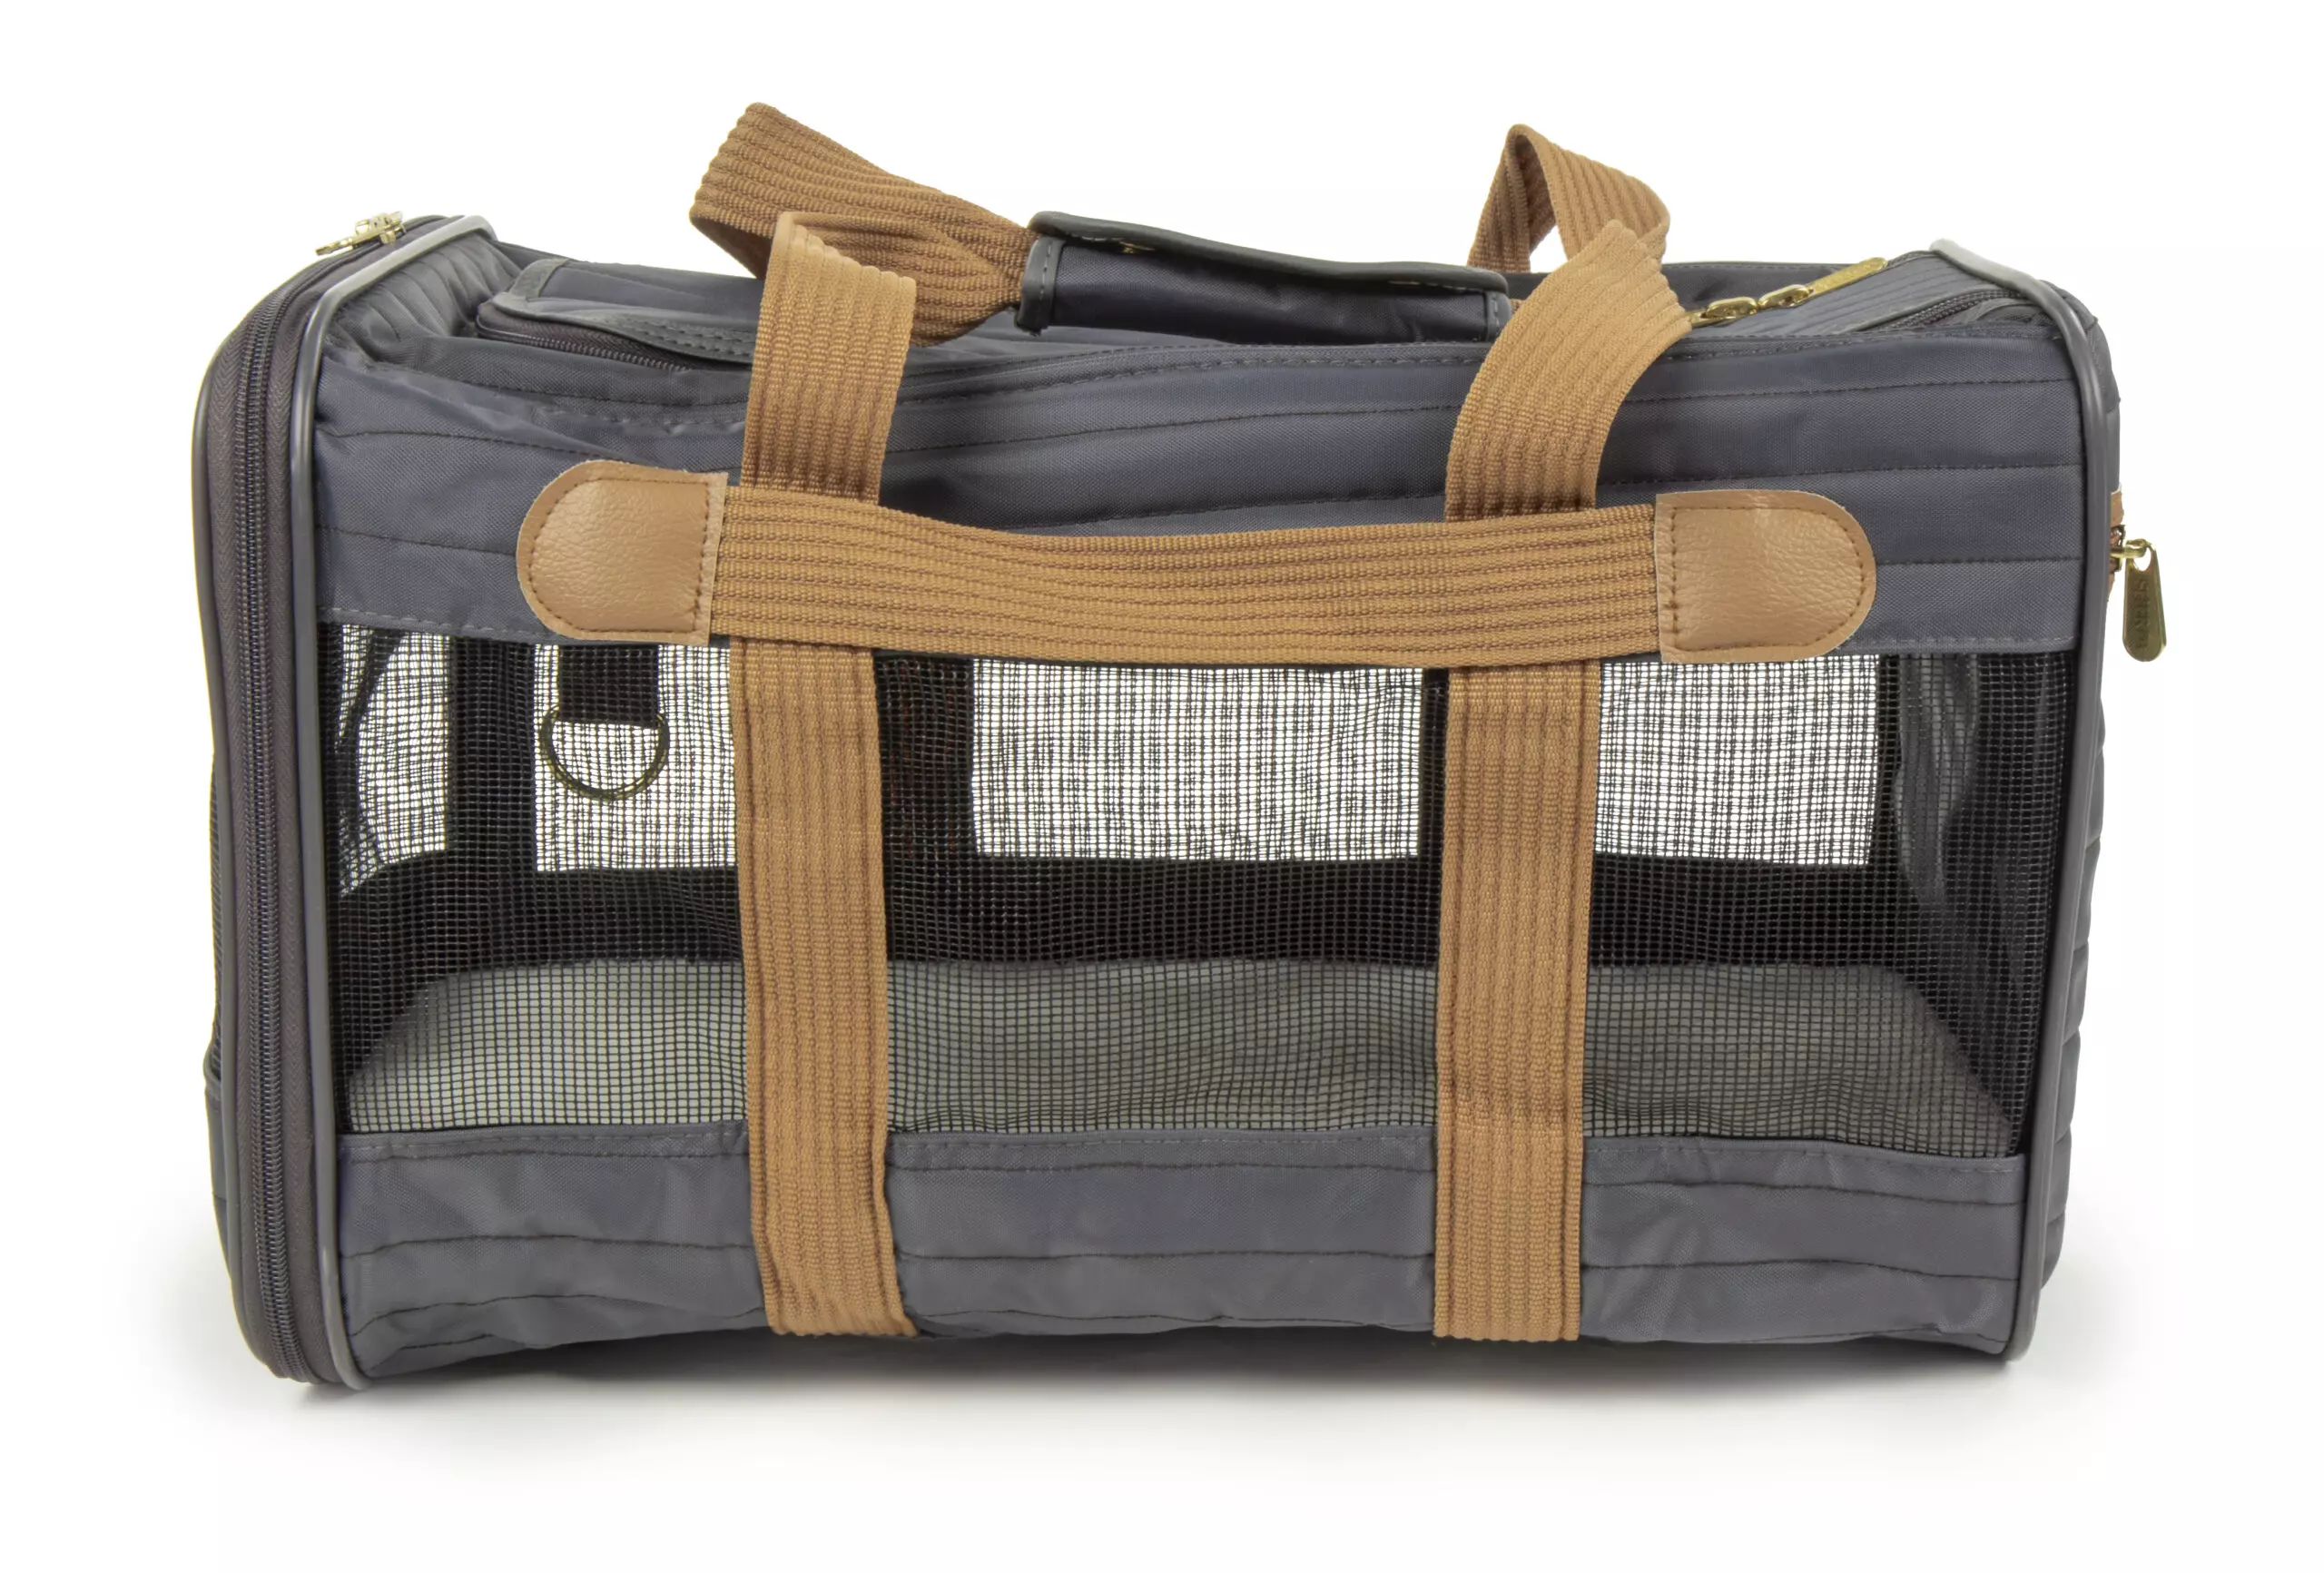 Sherpa Medium Pet Carrier with Duffel Backpack Design 55528